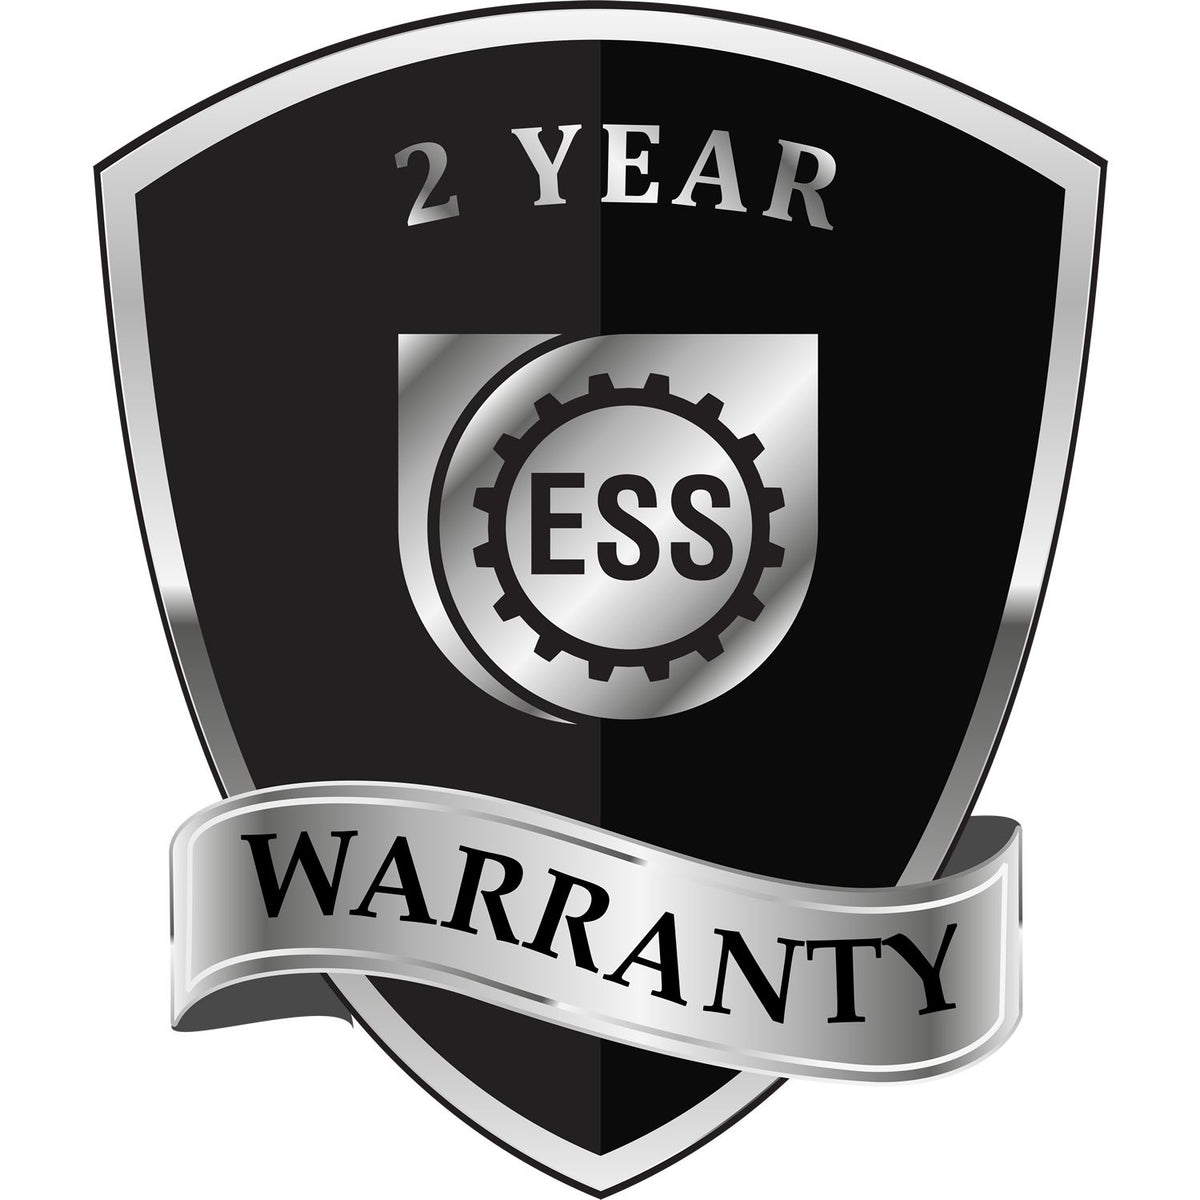 A black and silver badge or emblem showing warranty information for the Gift Mississippi Landscape Architect Seal